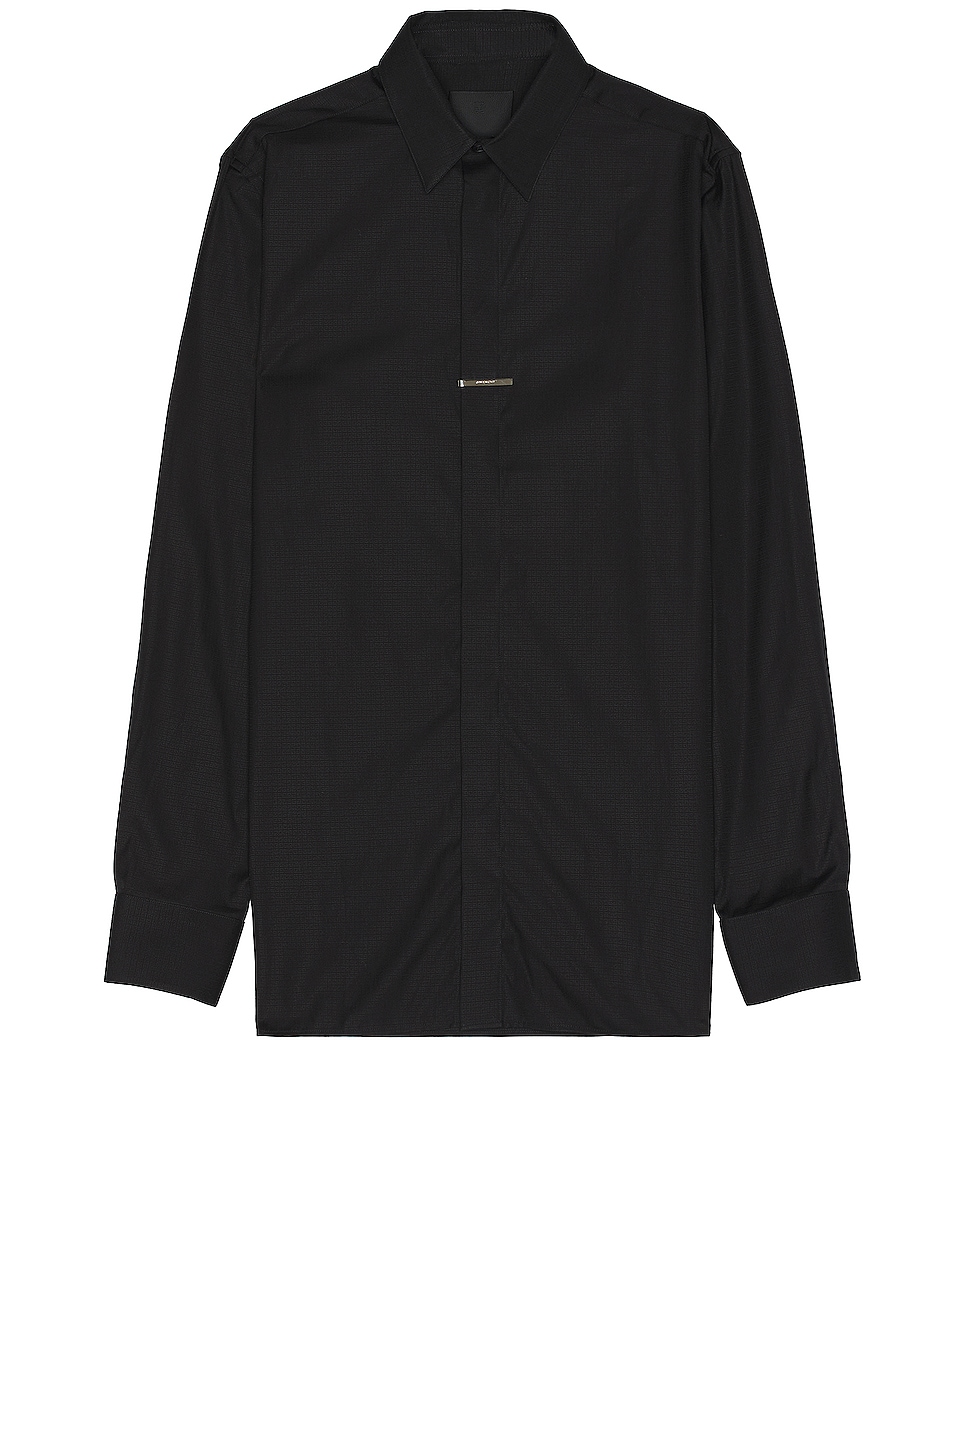 Image 1 of Givenchy Metal Bar Shirt in Black